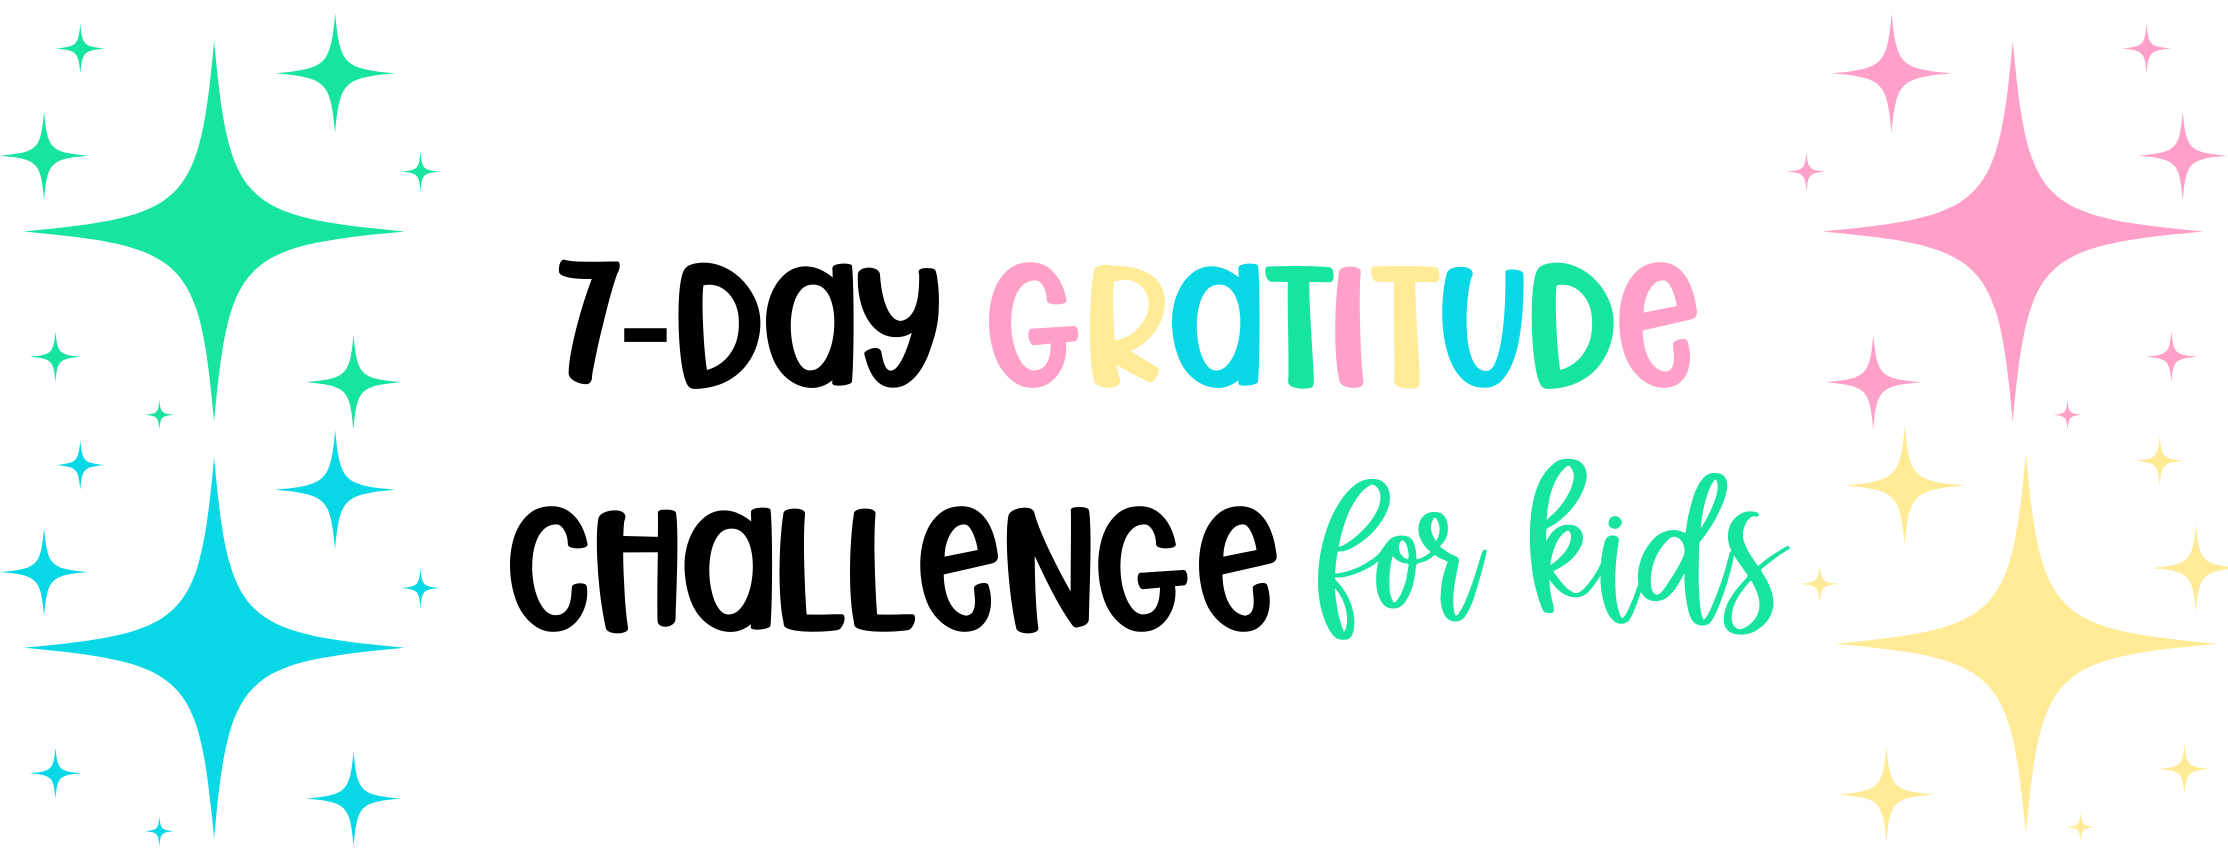 7 day gratitude challenge for kids